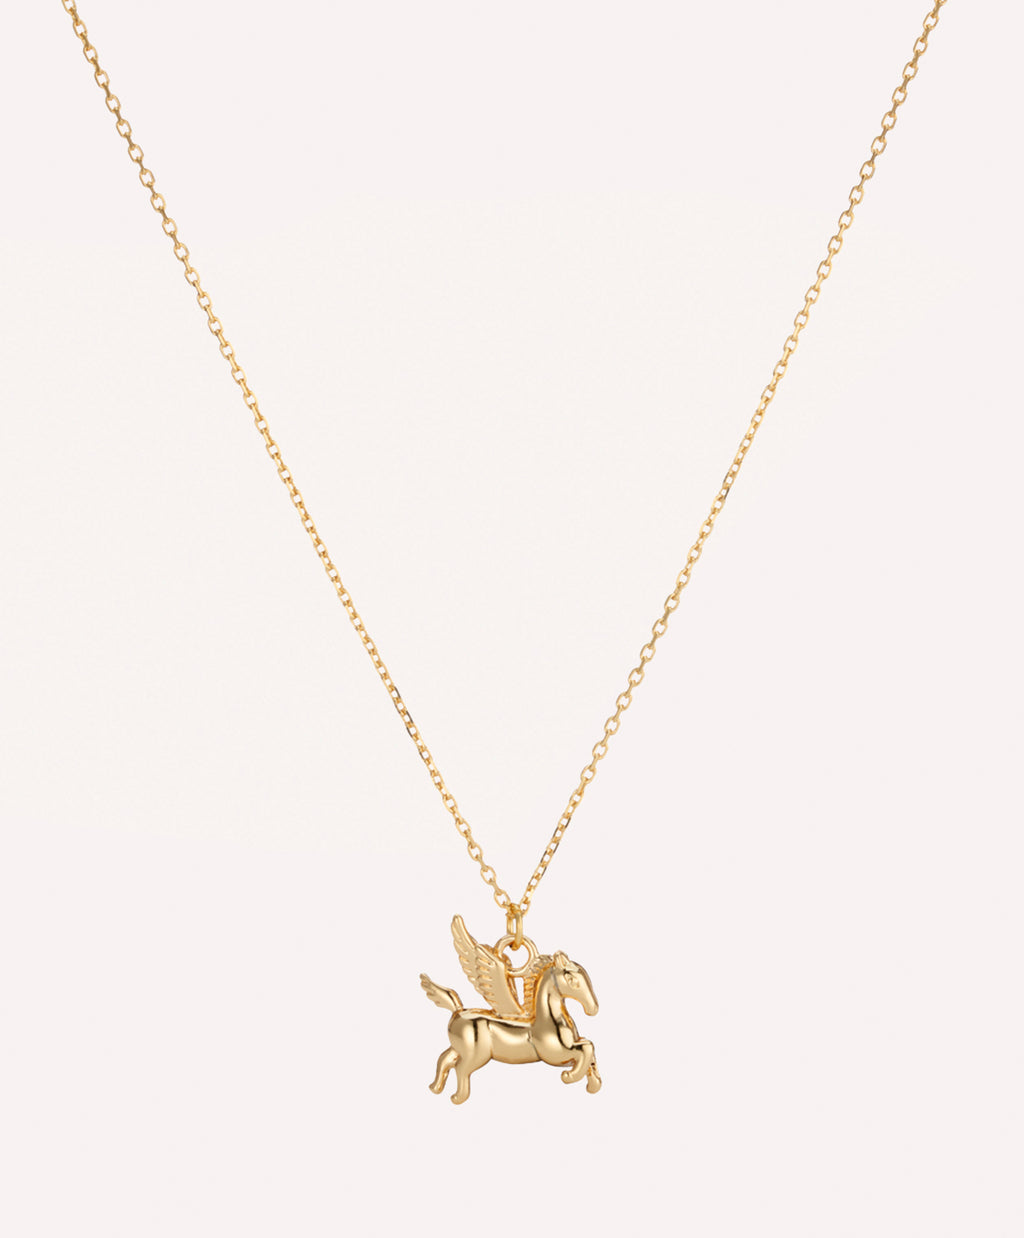 Gold plated pegasus horse charm pendant necklace